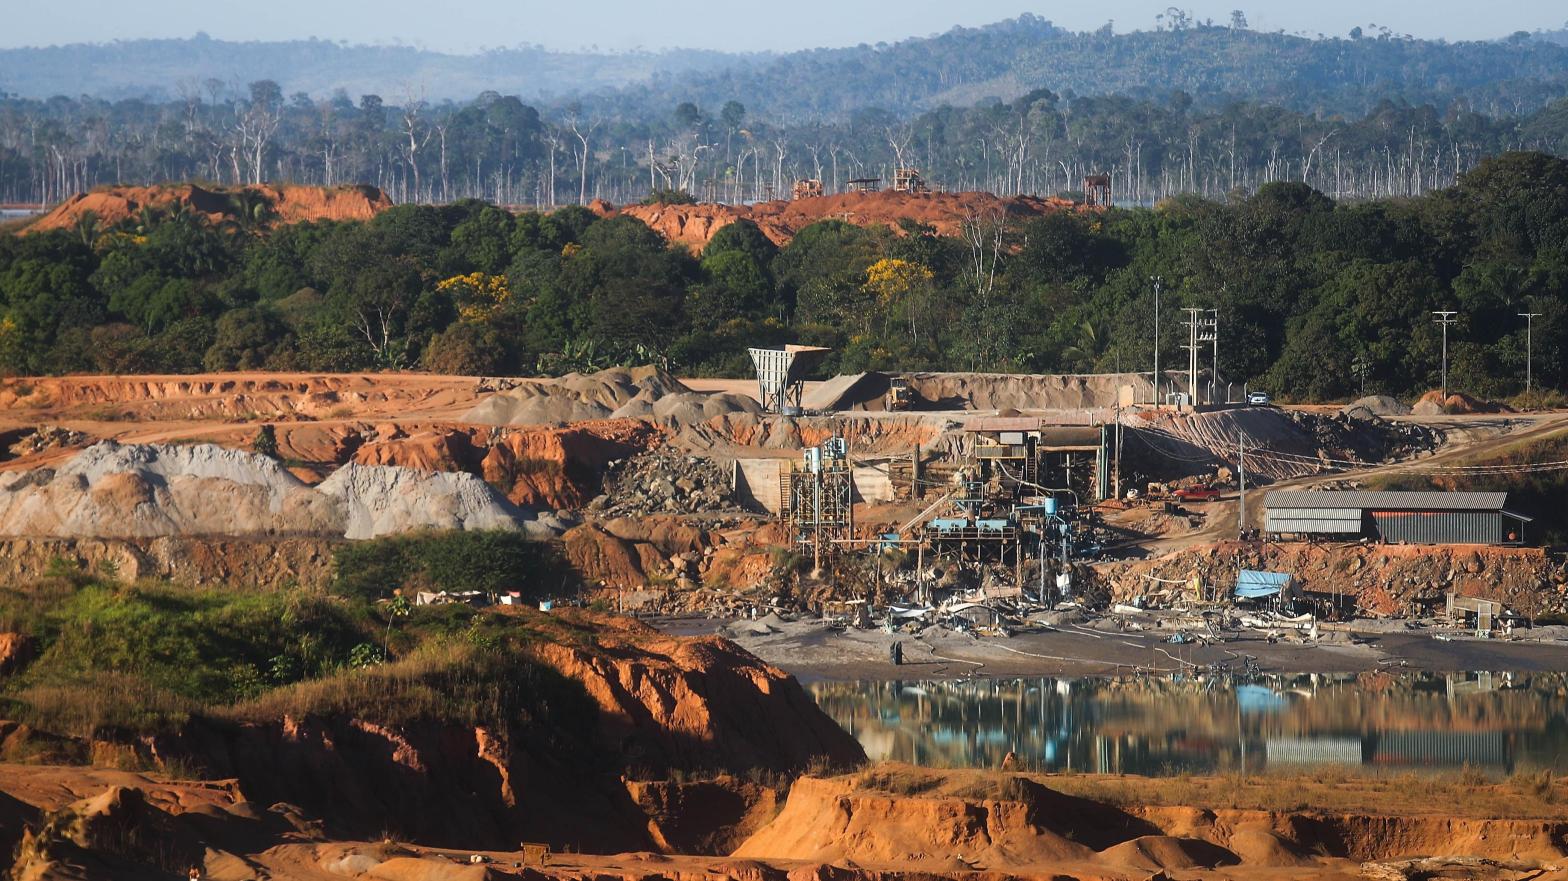 An open-air tin mine in the Brazilian Amazon. (Photo: Mario Tama, Getty Images)